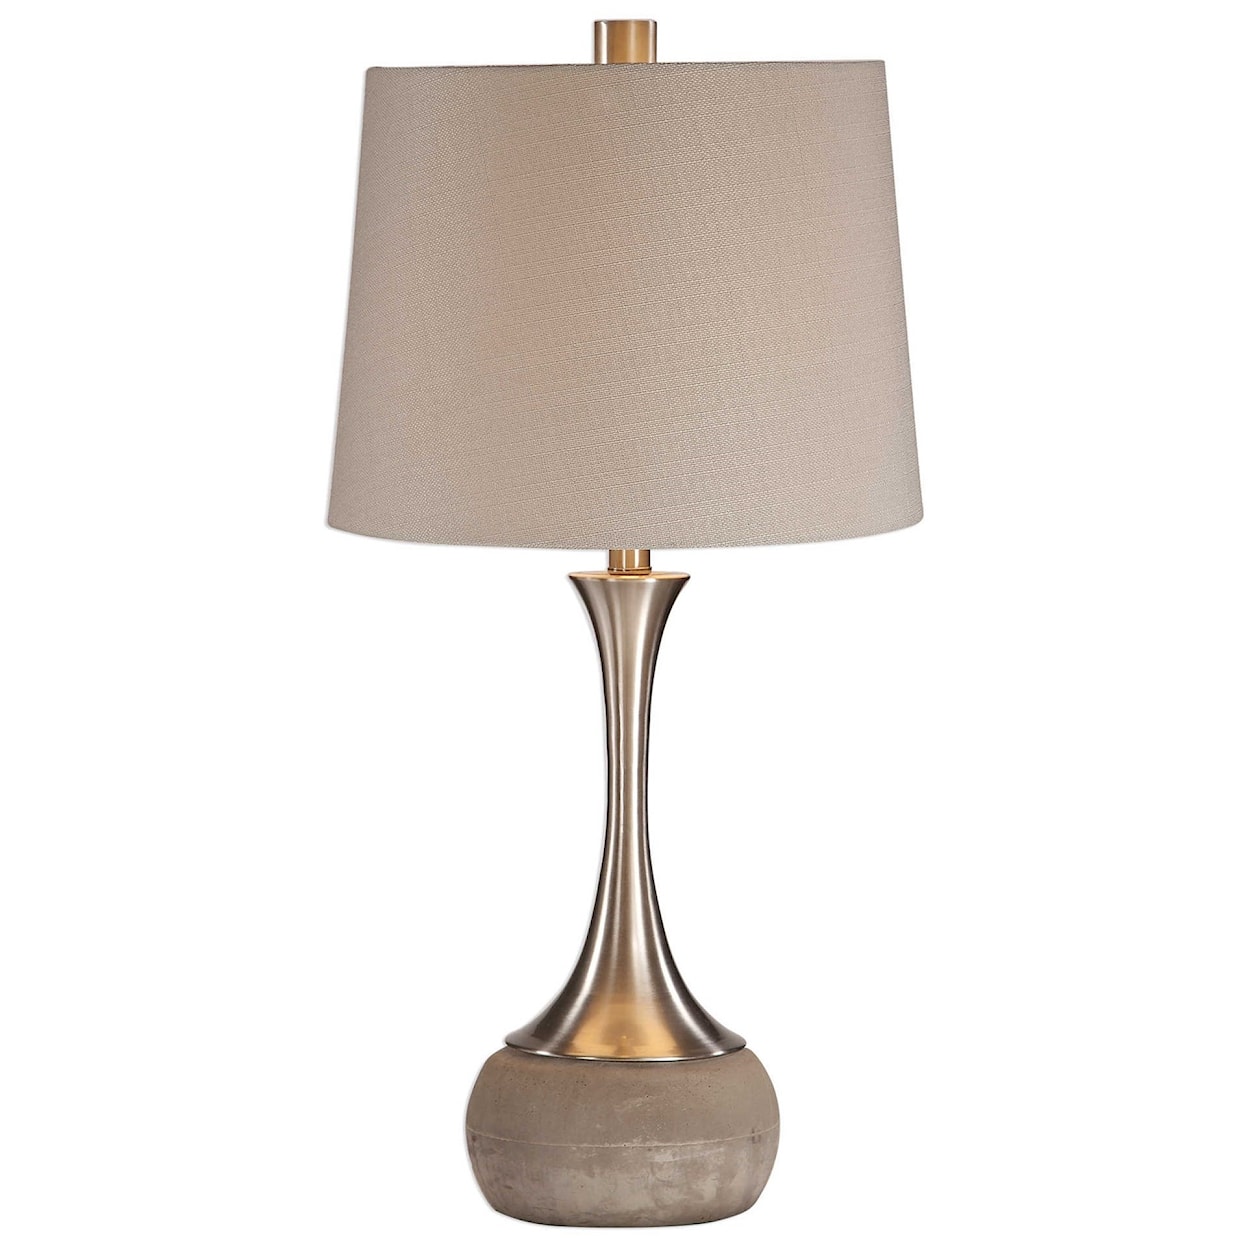 Uttermost Table Lamps Niah Brushed Nickel Lamp